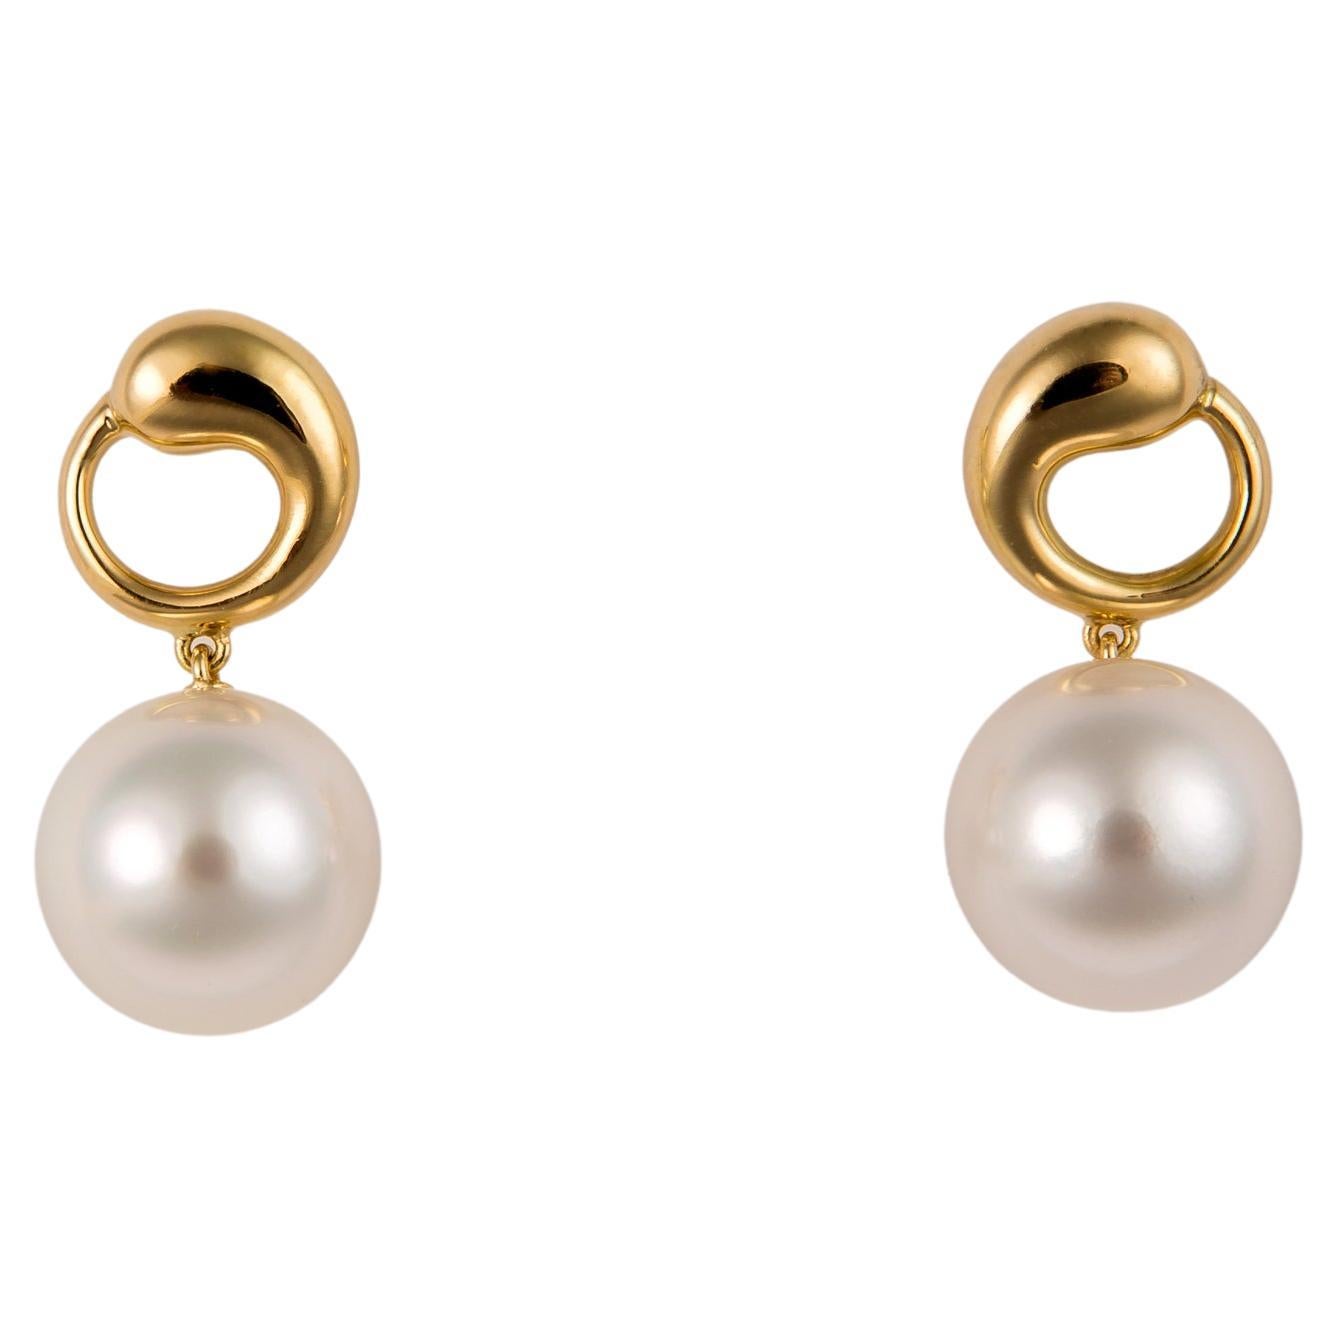 Elsa Peretti for Tiffany & Co. Gold and South Sea Pearl Drop Earrings